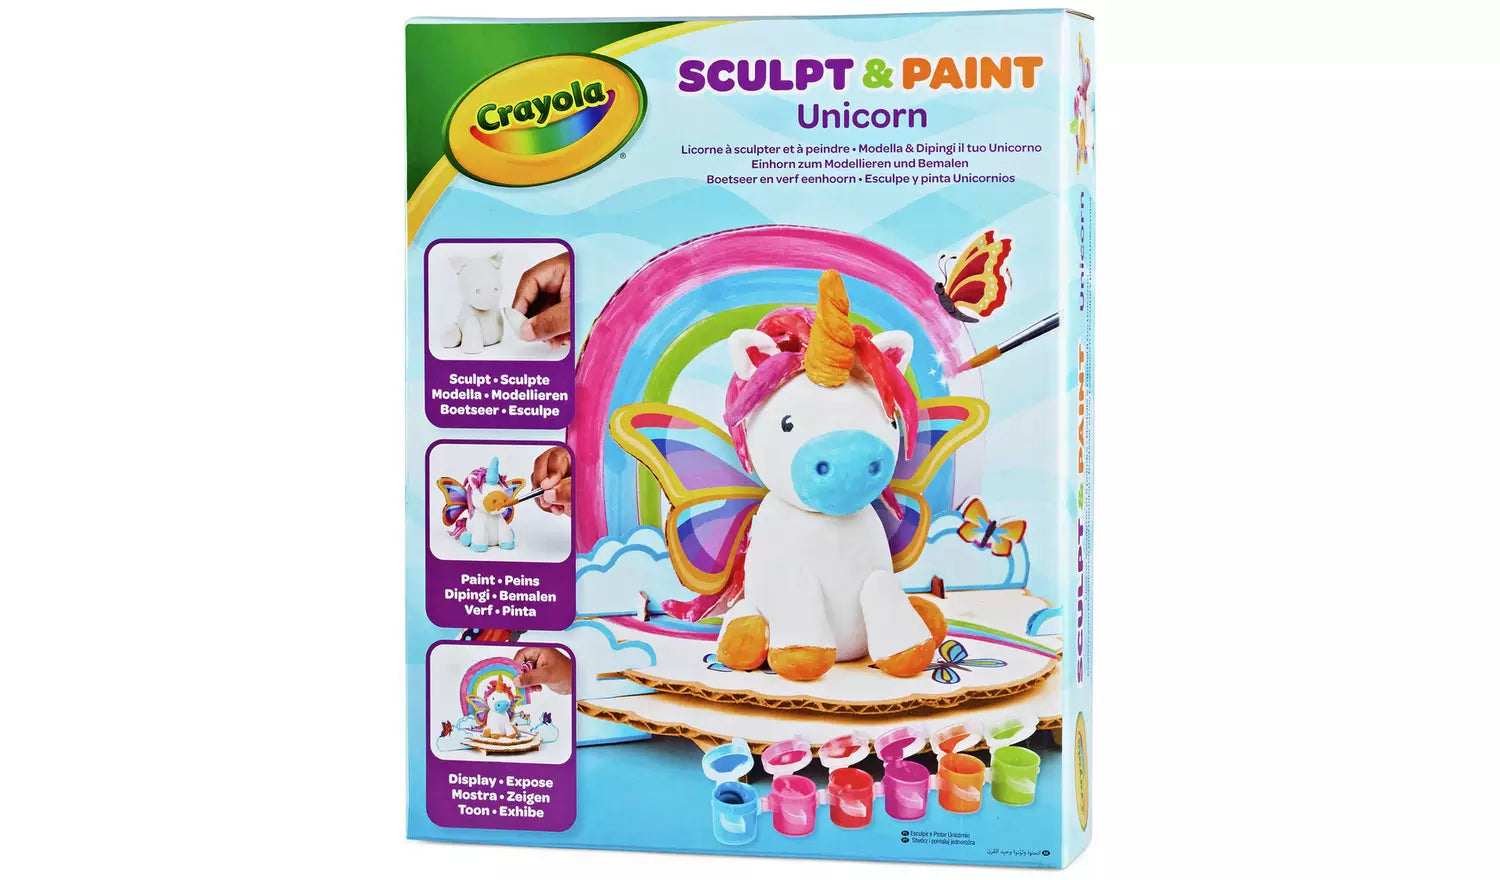 Crayola Sculpt & Paint Unicorn